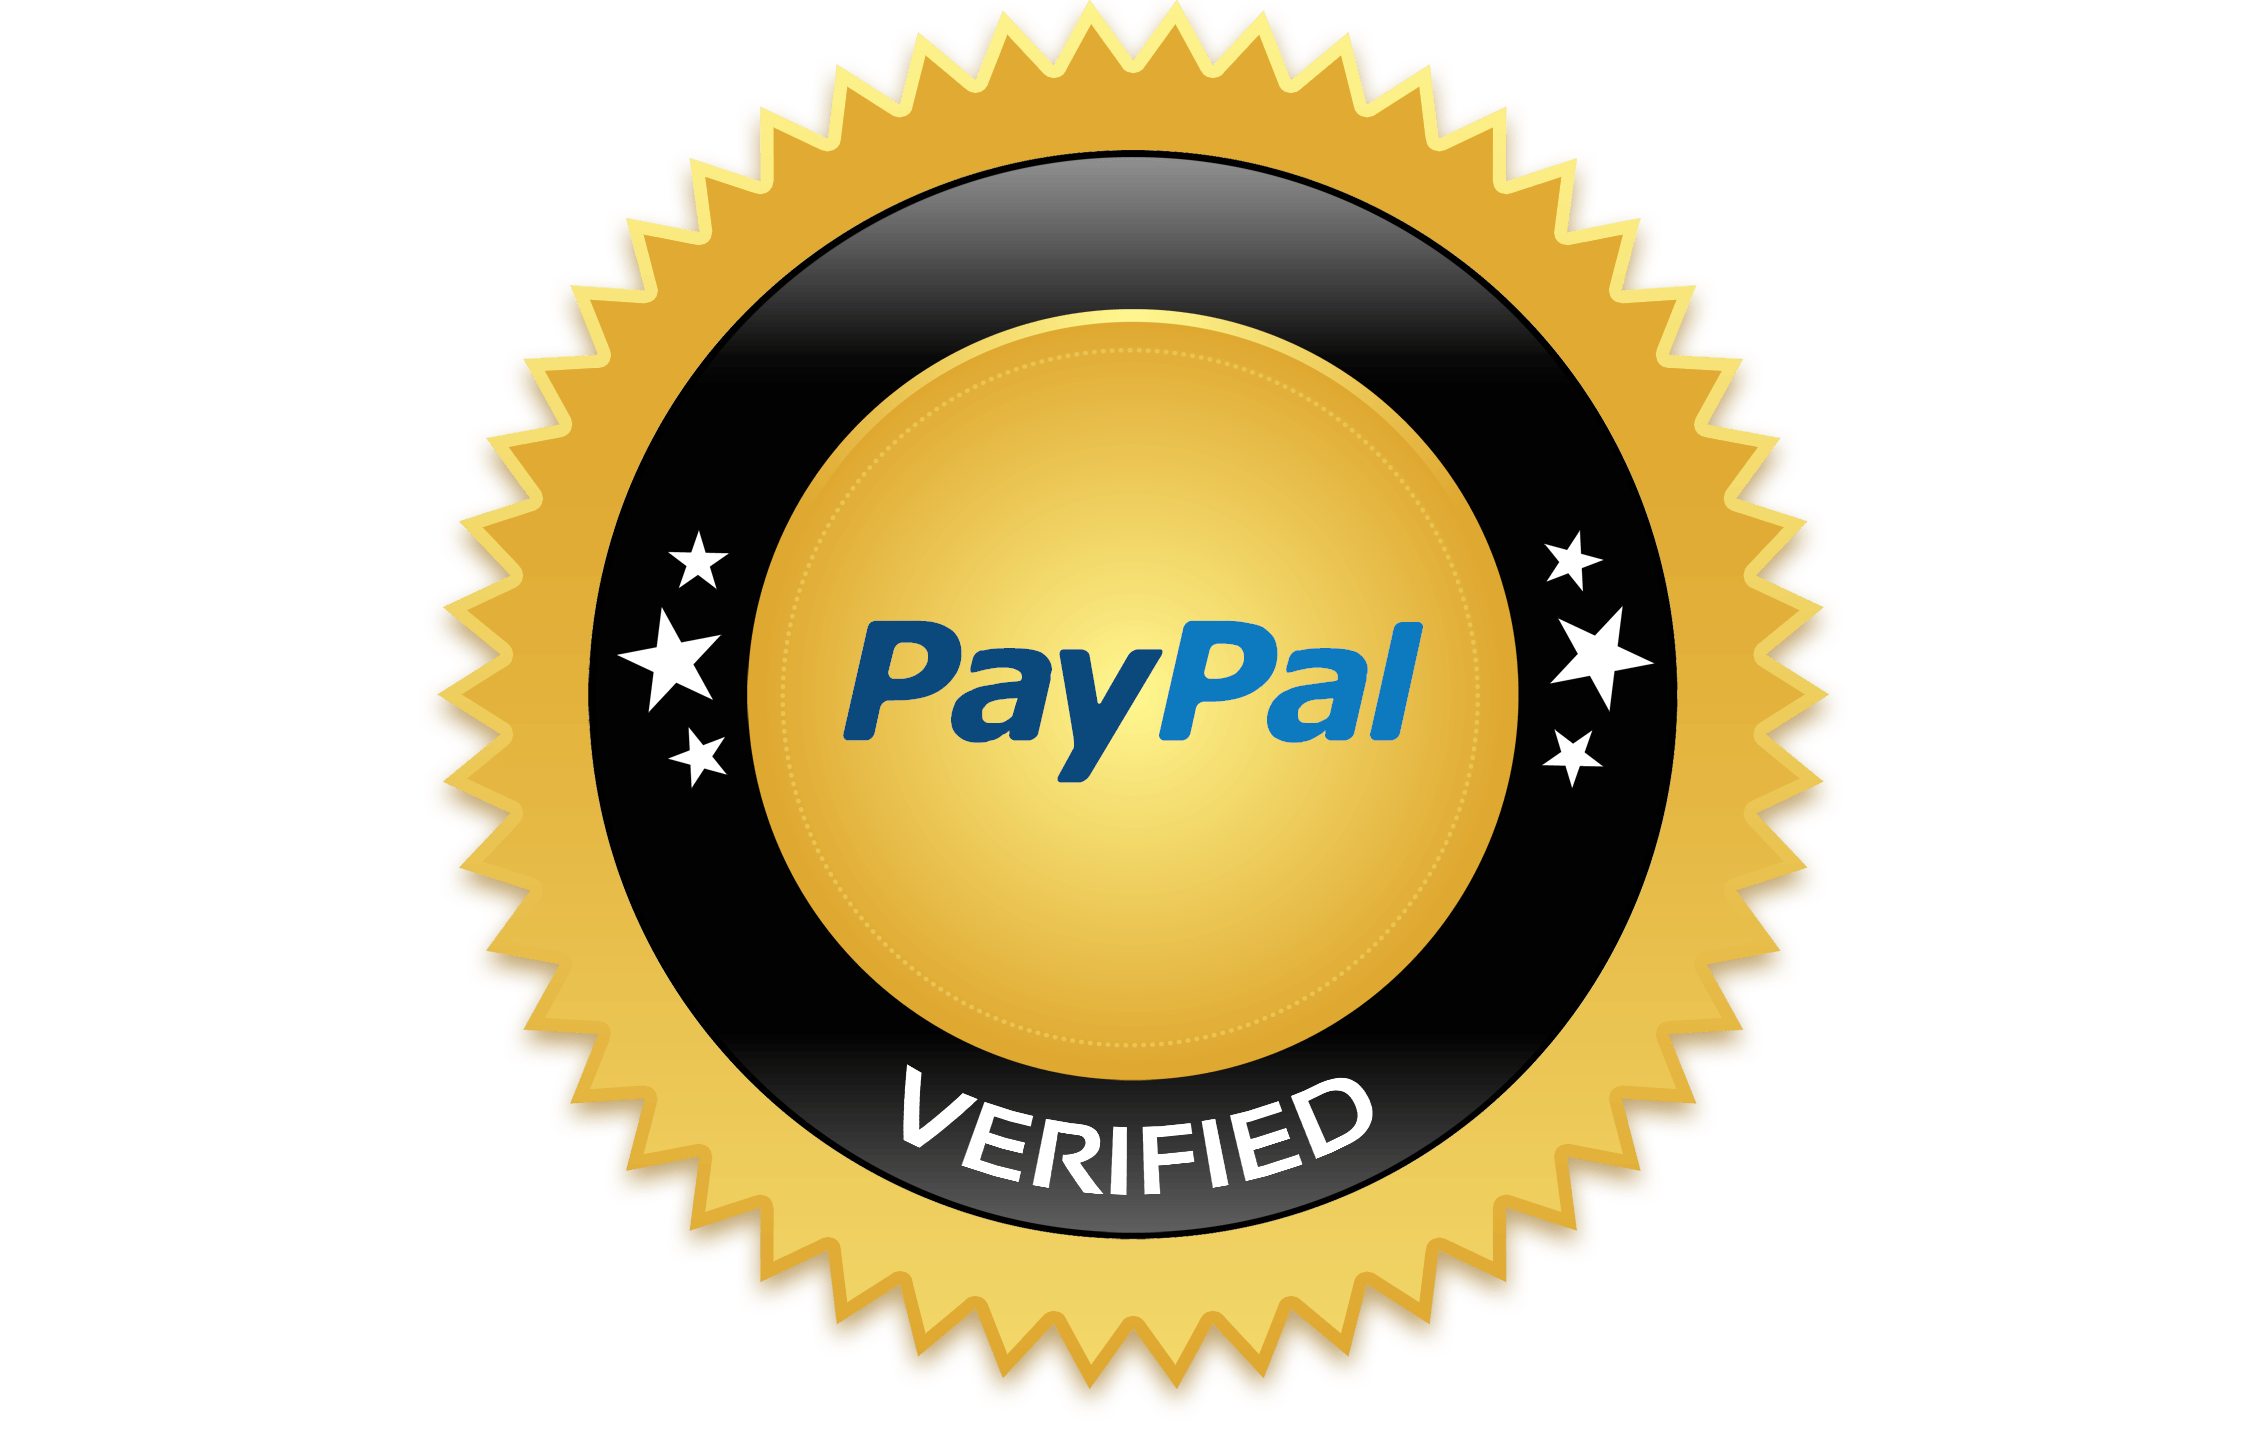 PayPal Verified Logo - Paypal Verified Logo, Paypal Icon, Symbols, Emblem Png - Free ...